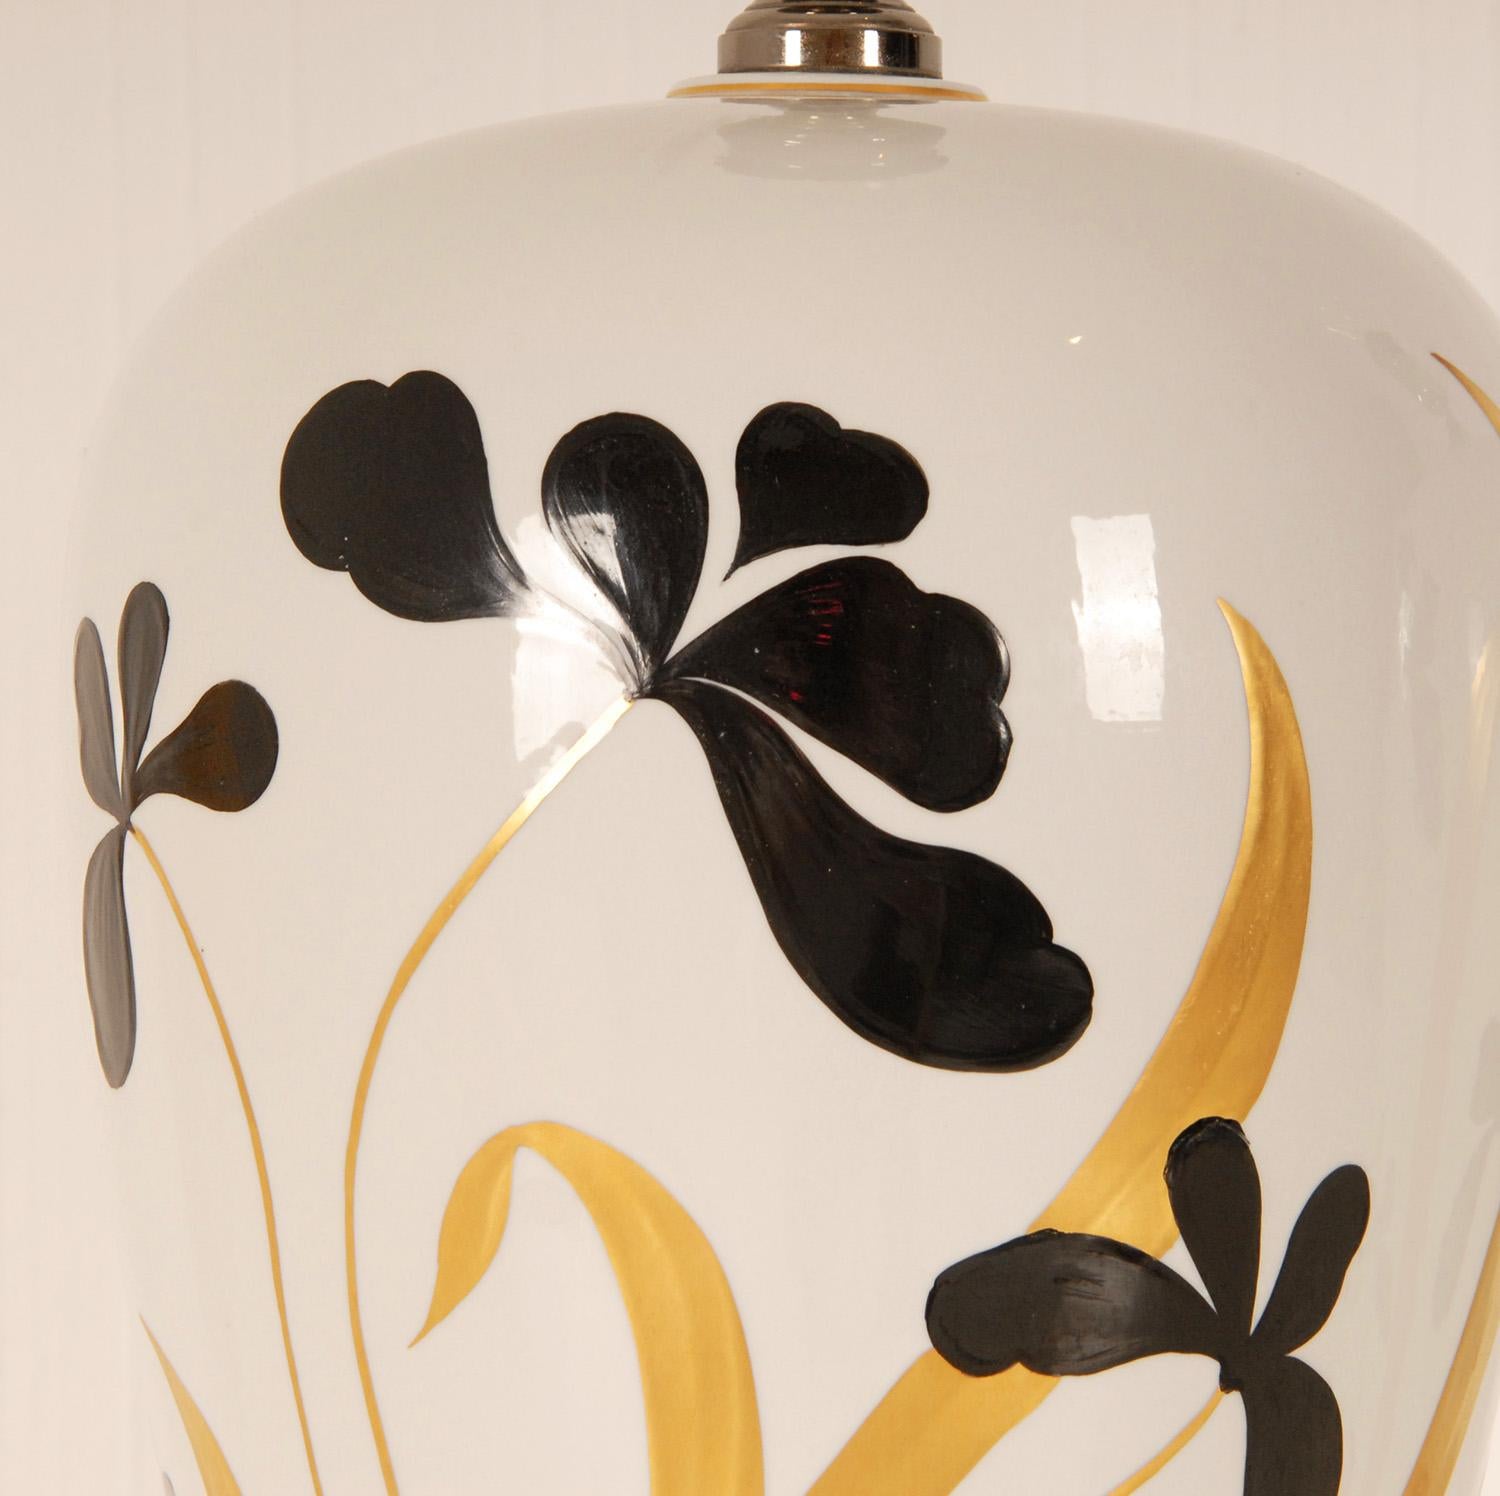 Vintage 1970s Italian Ceramic Vase Lamps Gold Black White Porcelain, a Pair For Sale 5